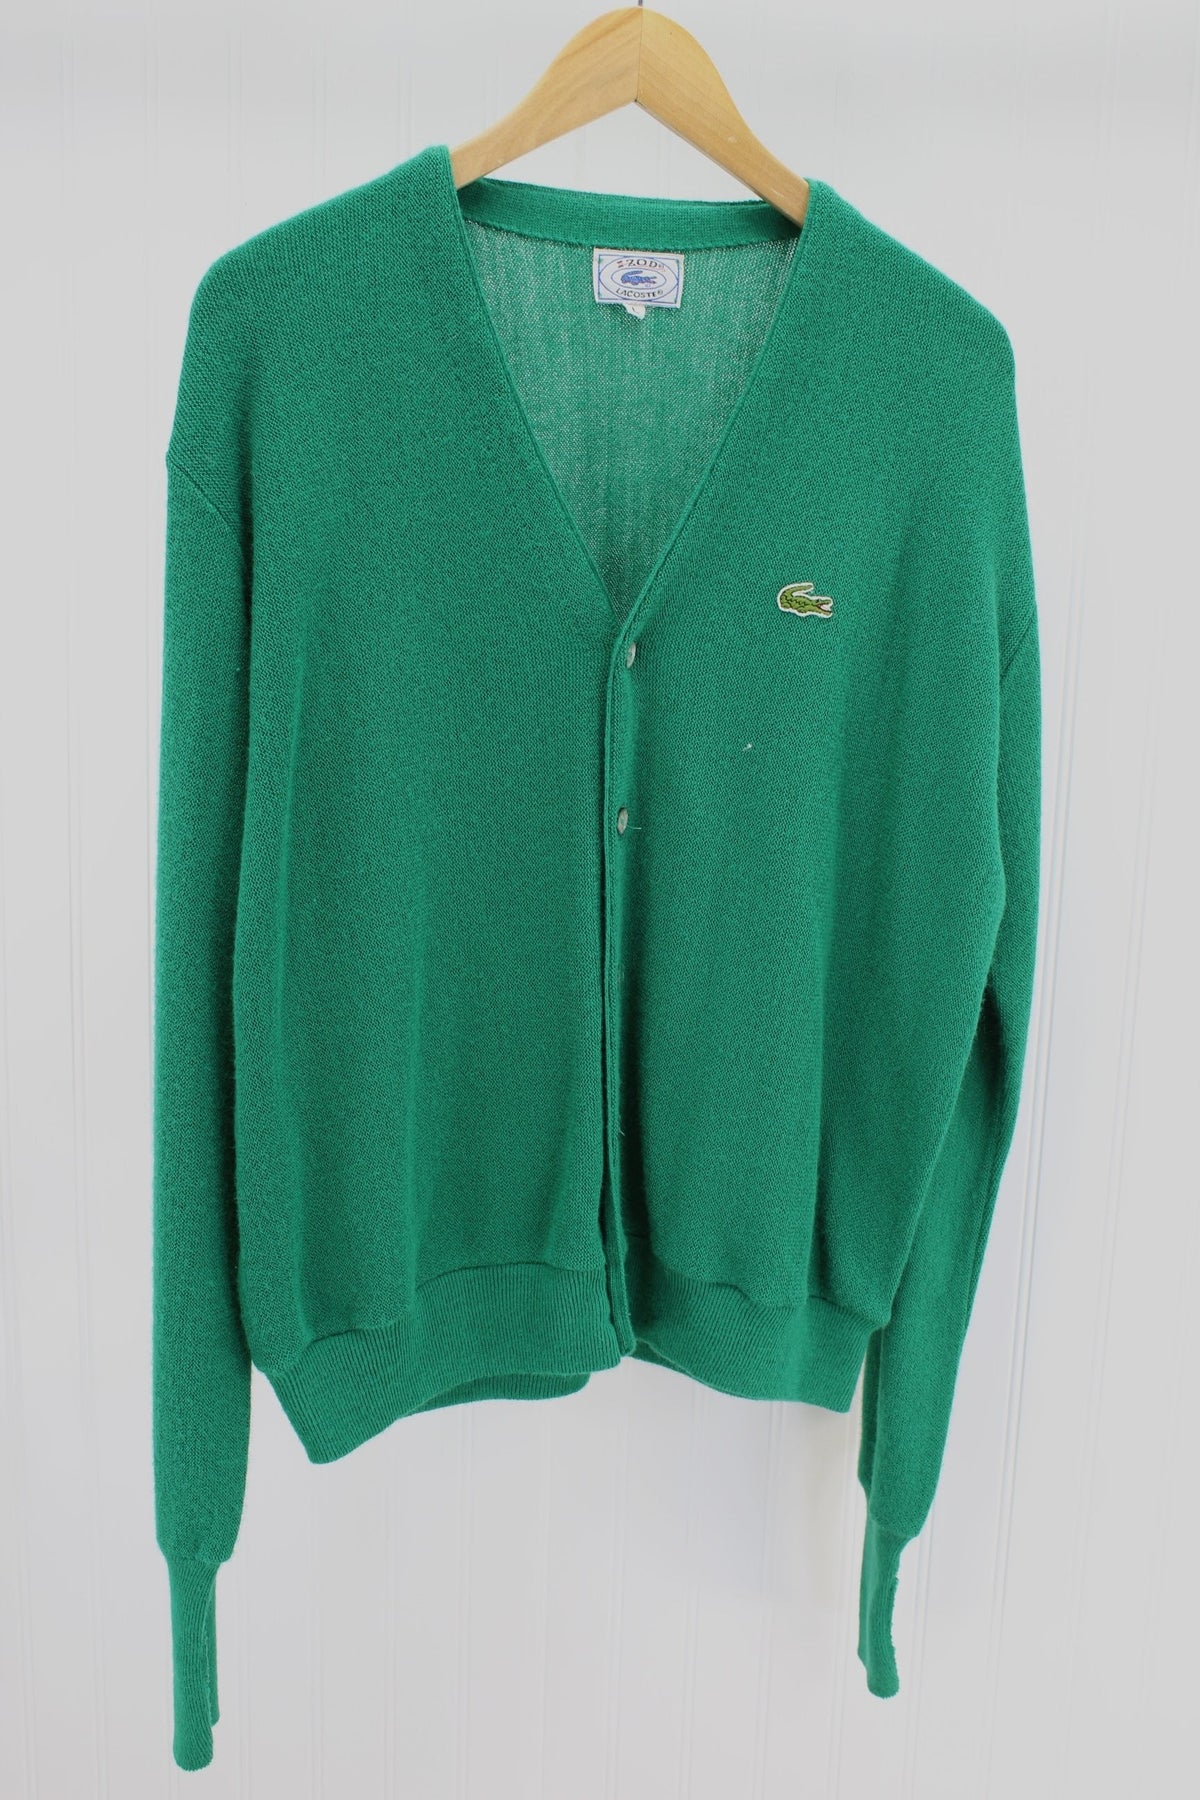 lacoste green sweater